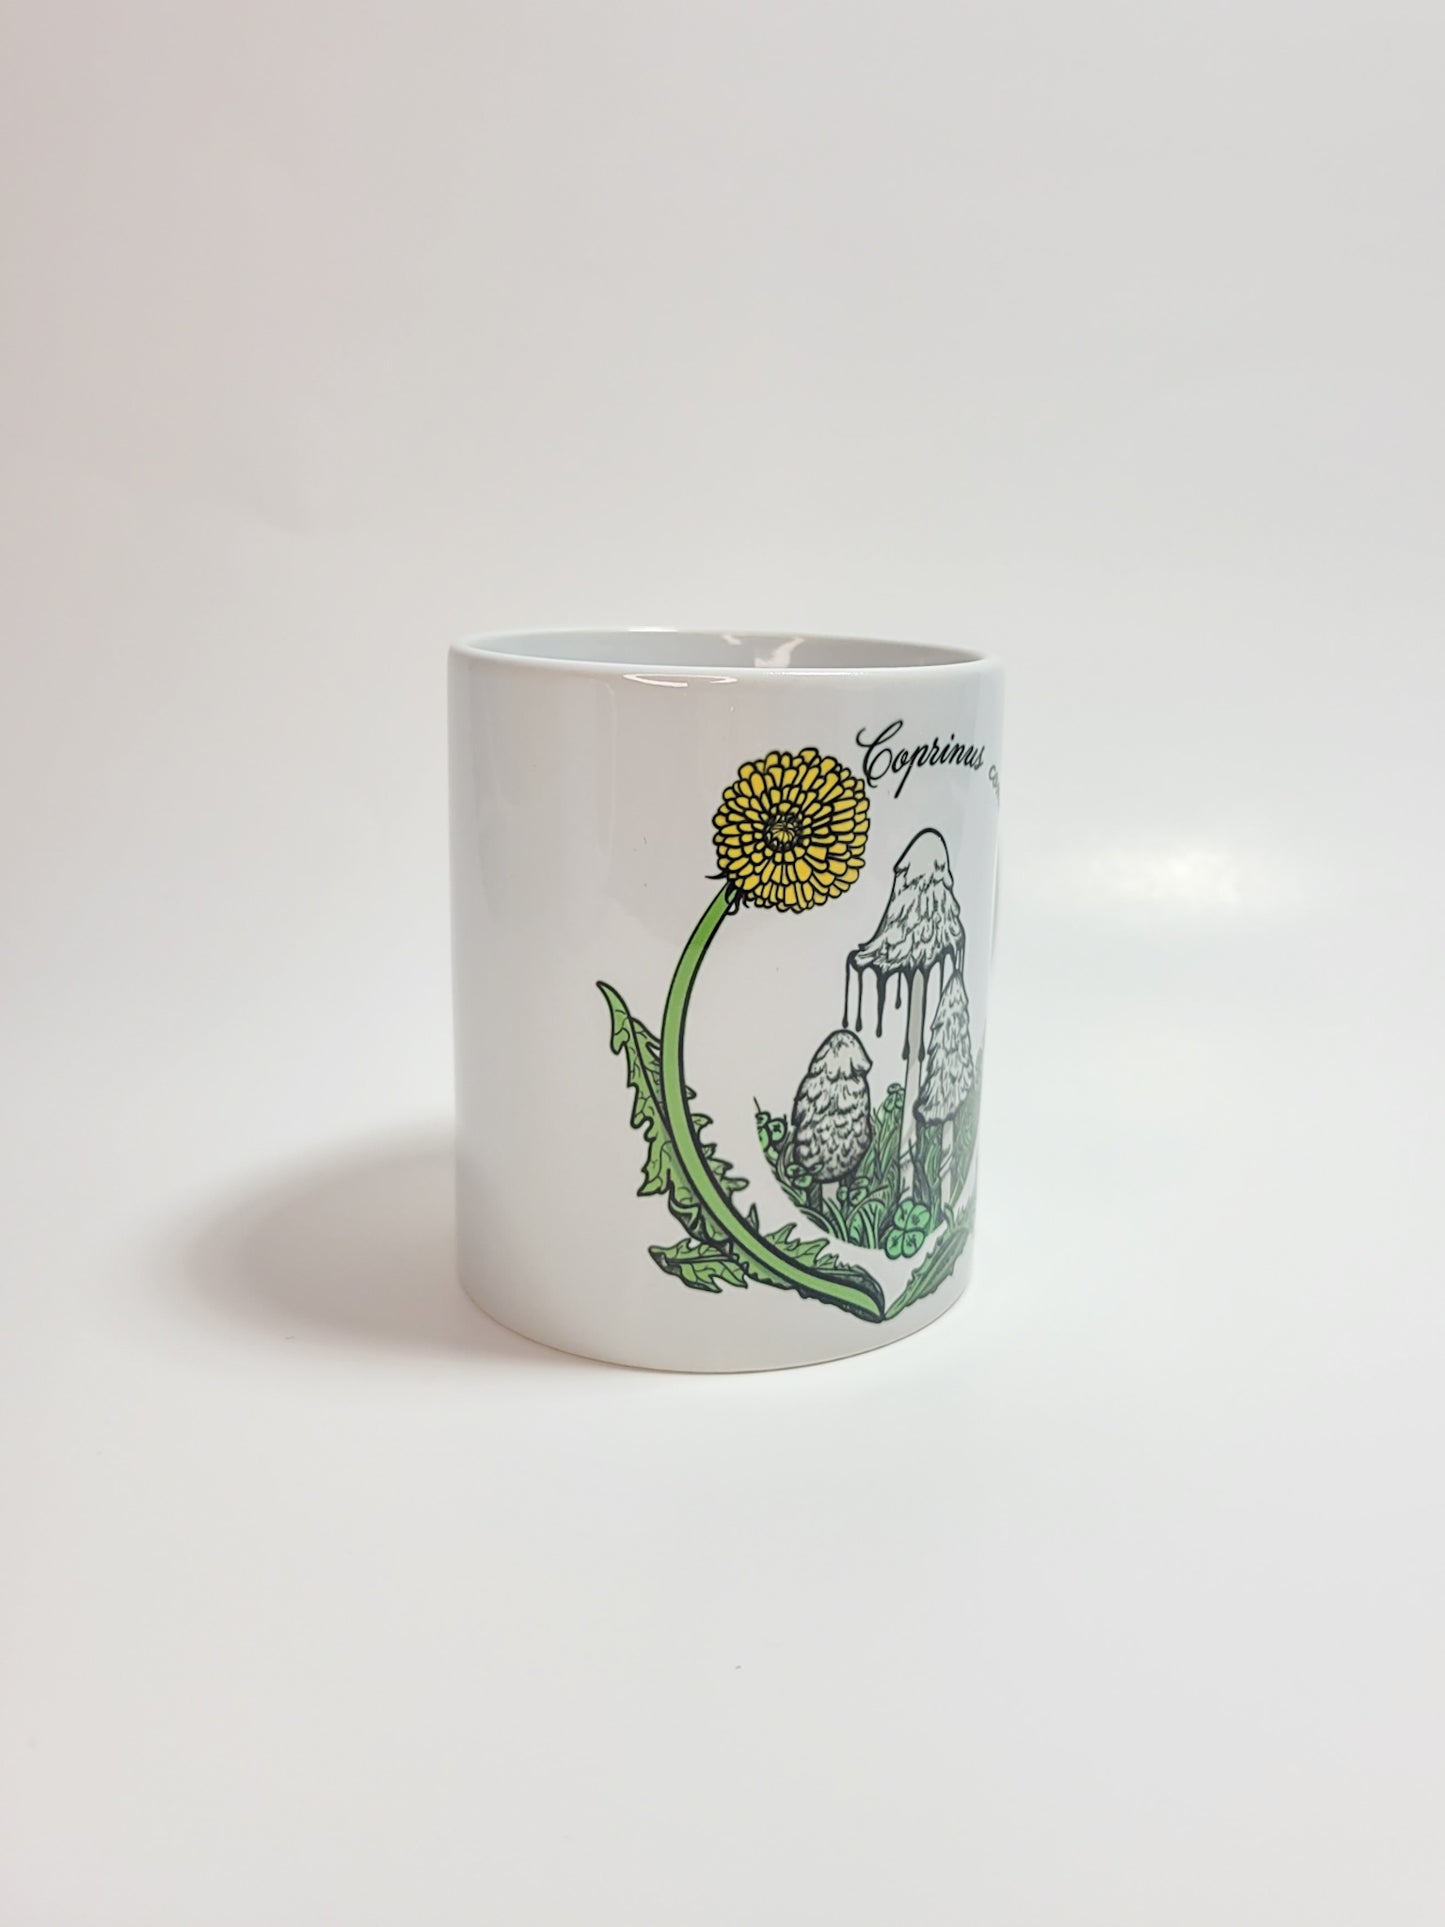 Coprinus Comatus | Shaggy Mane Mushroom Mug | Mushroom Artwork on Ceramic Cup | 11oz/15oz Sizes